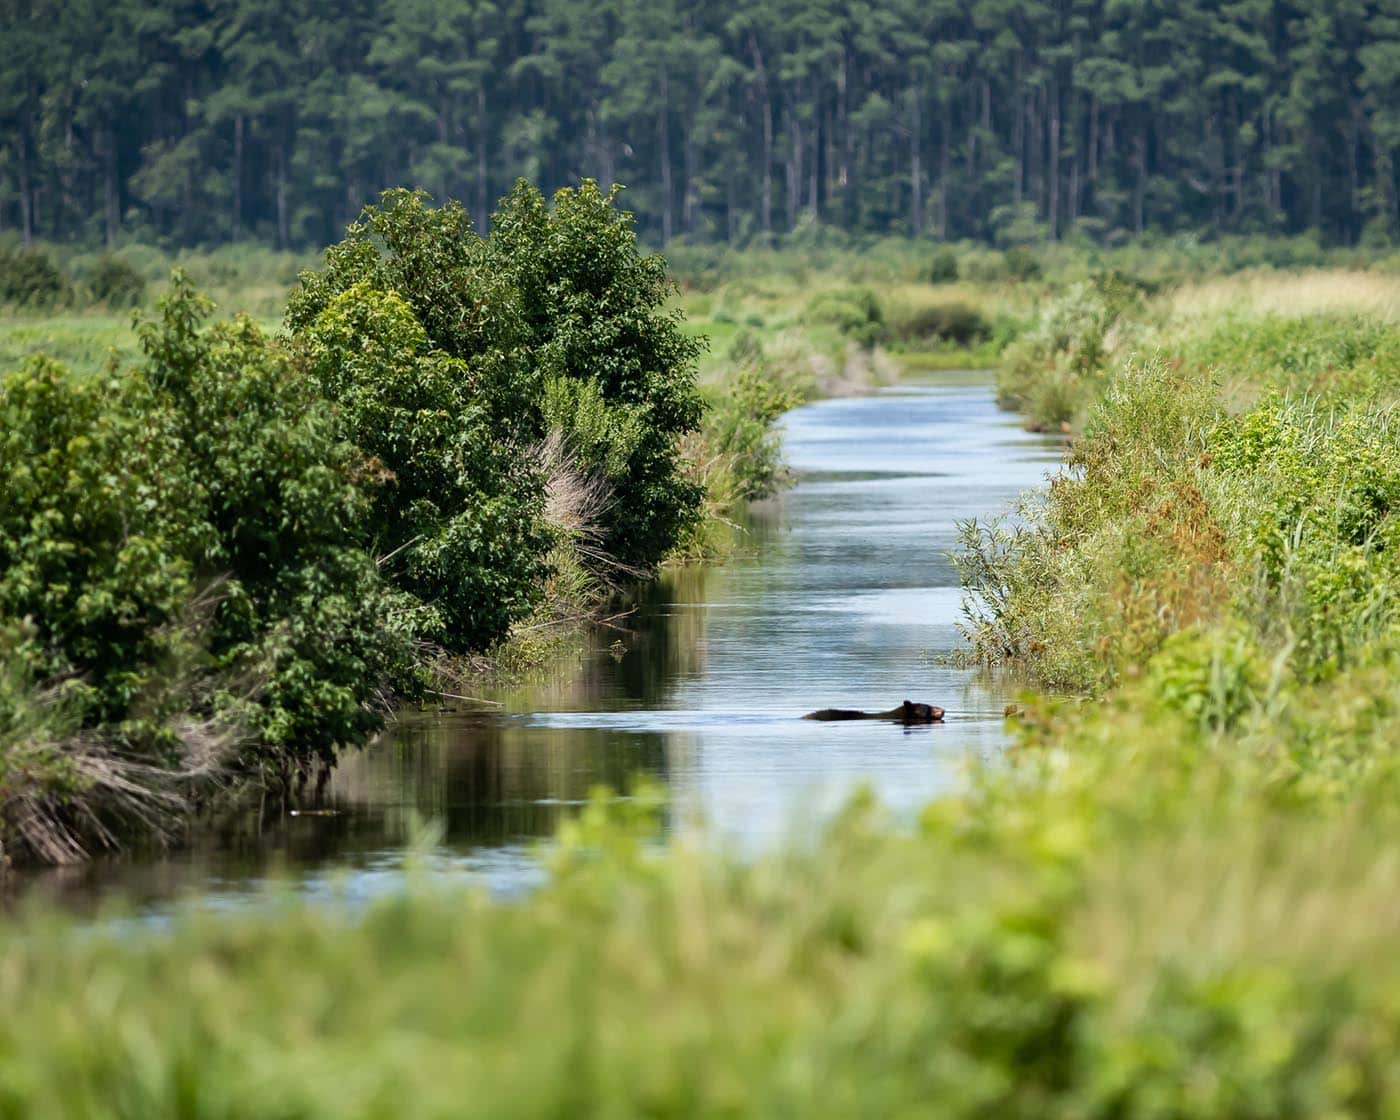 A bear swims across a creek in the NC wetlands